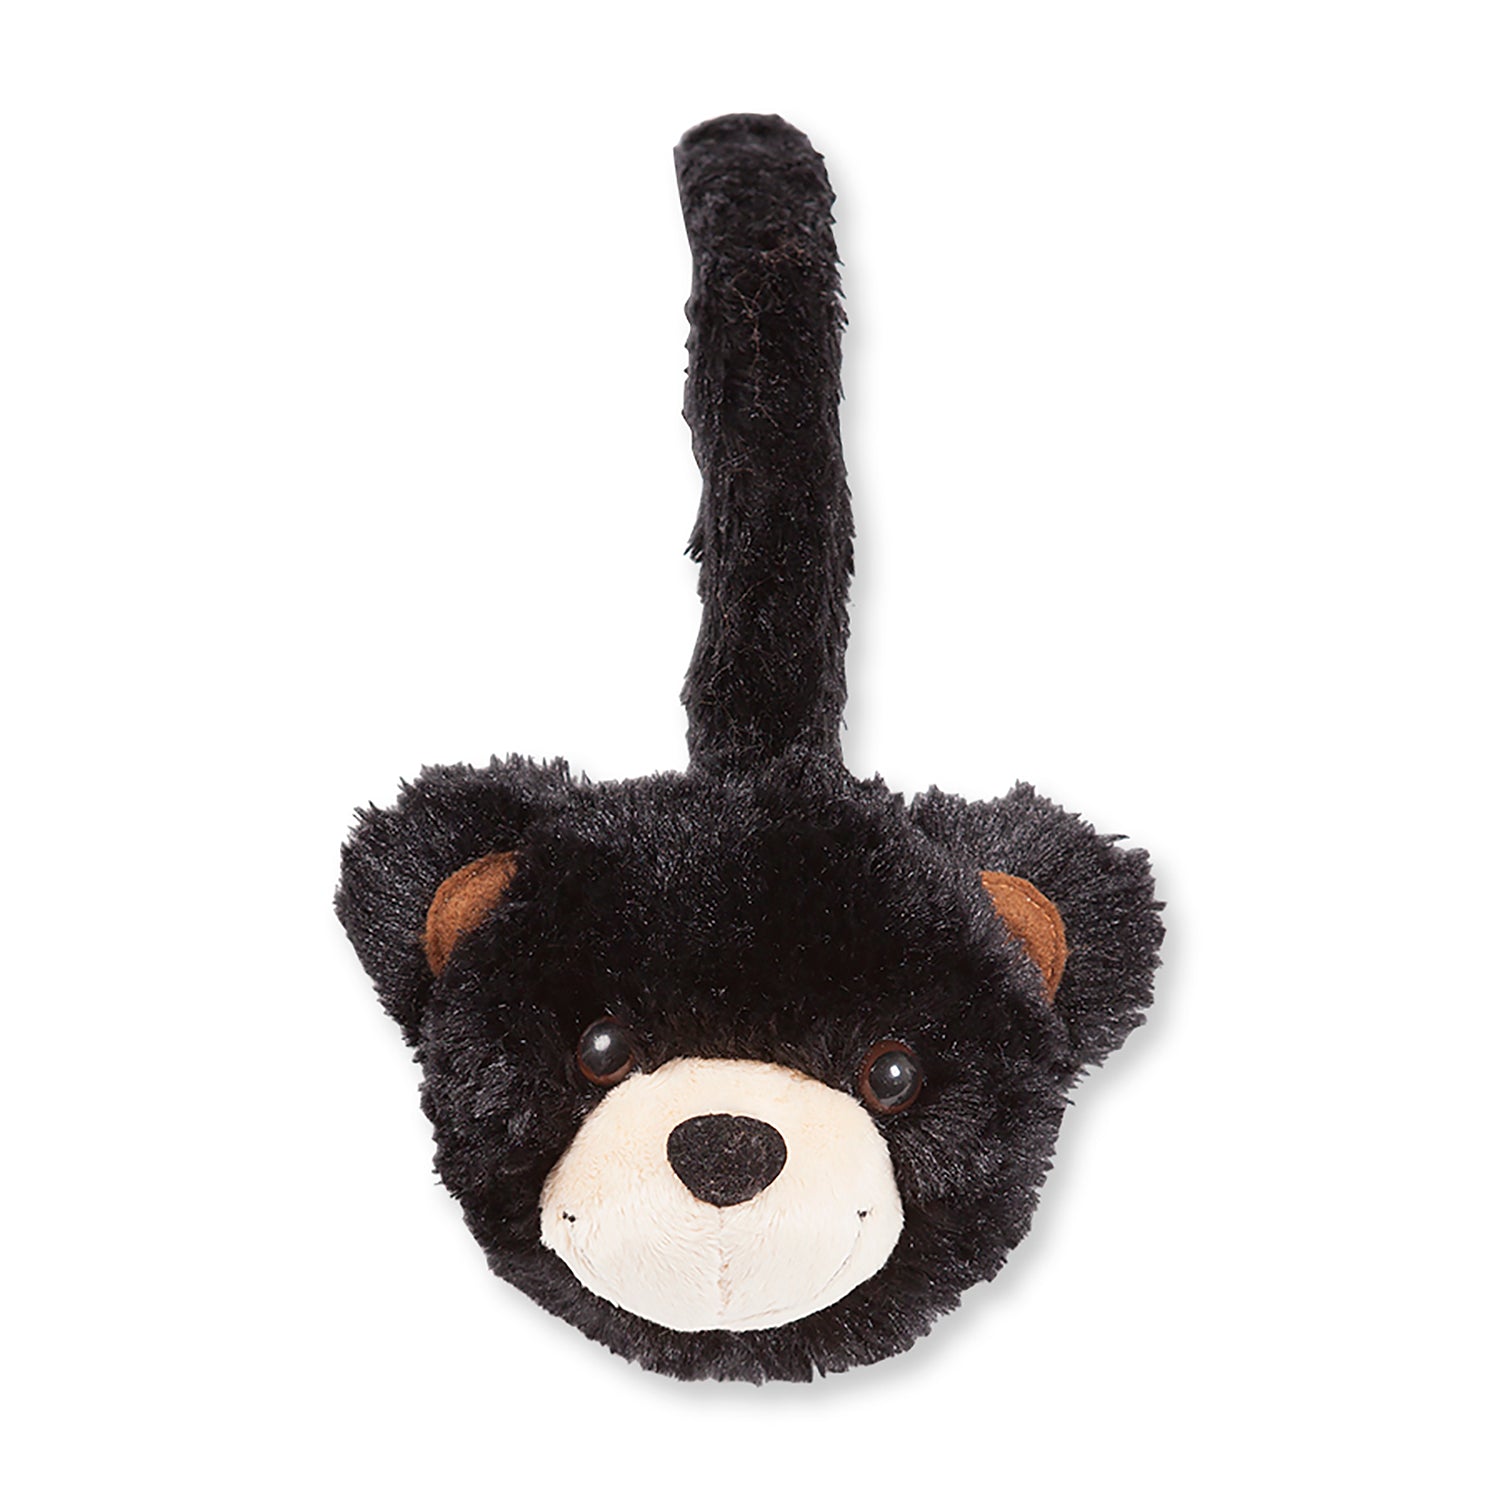 Animalz Ear Headphones Bear | Kids Headphones | Retractable Cable